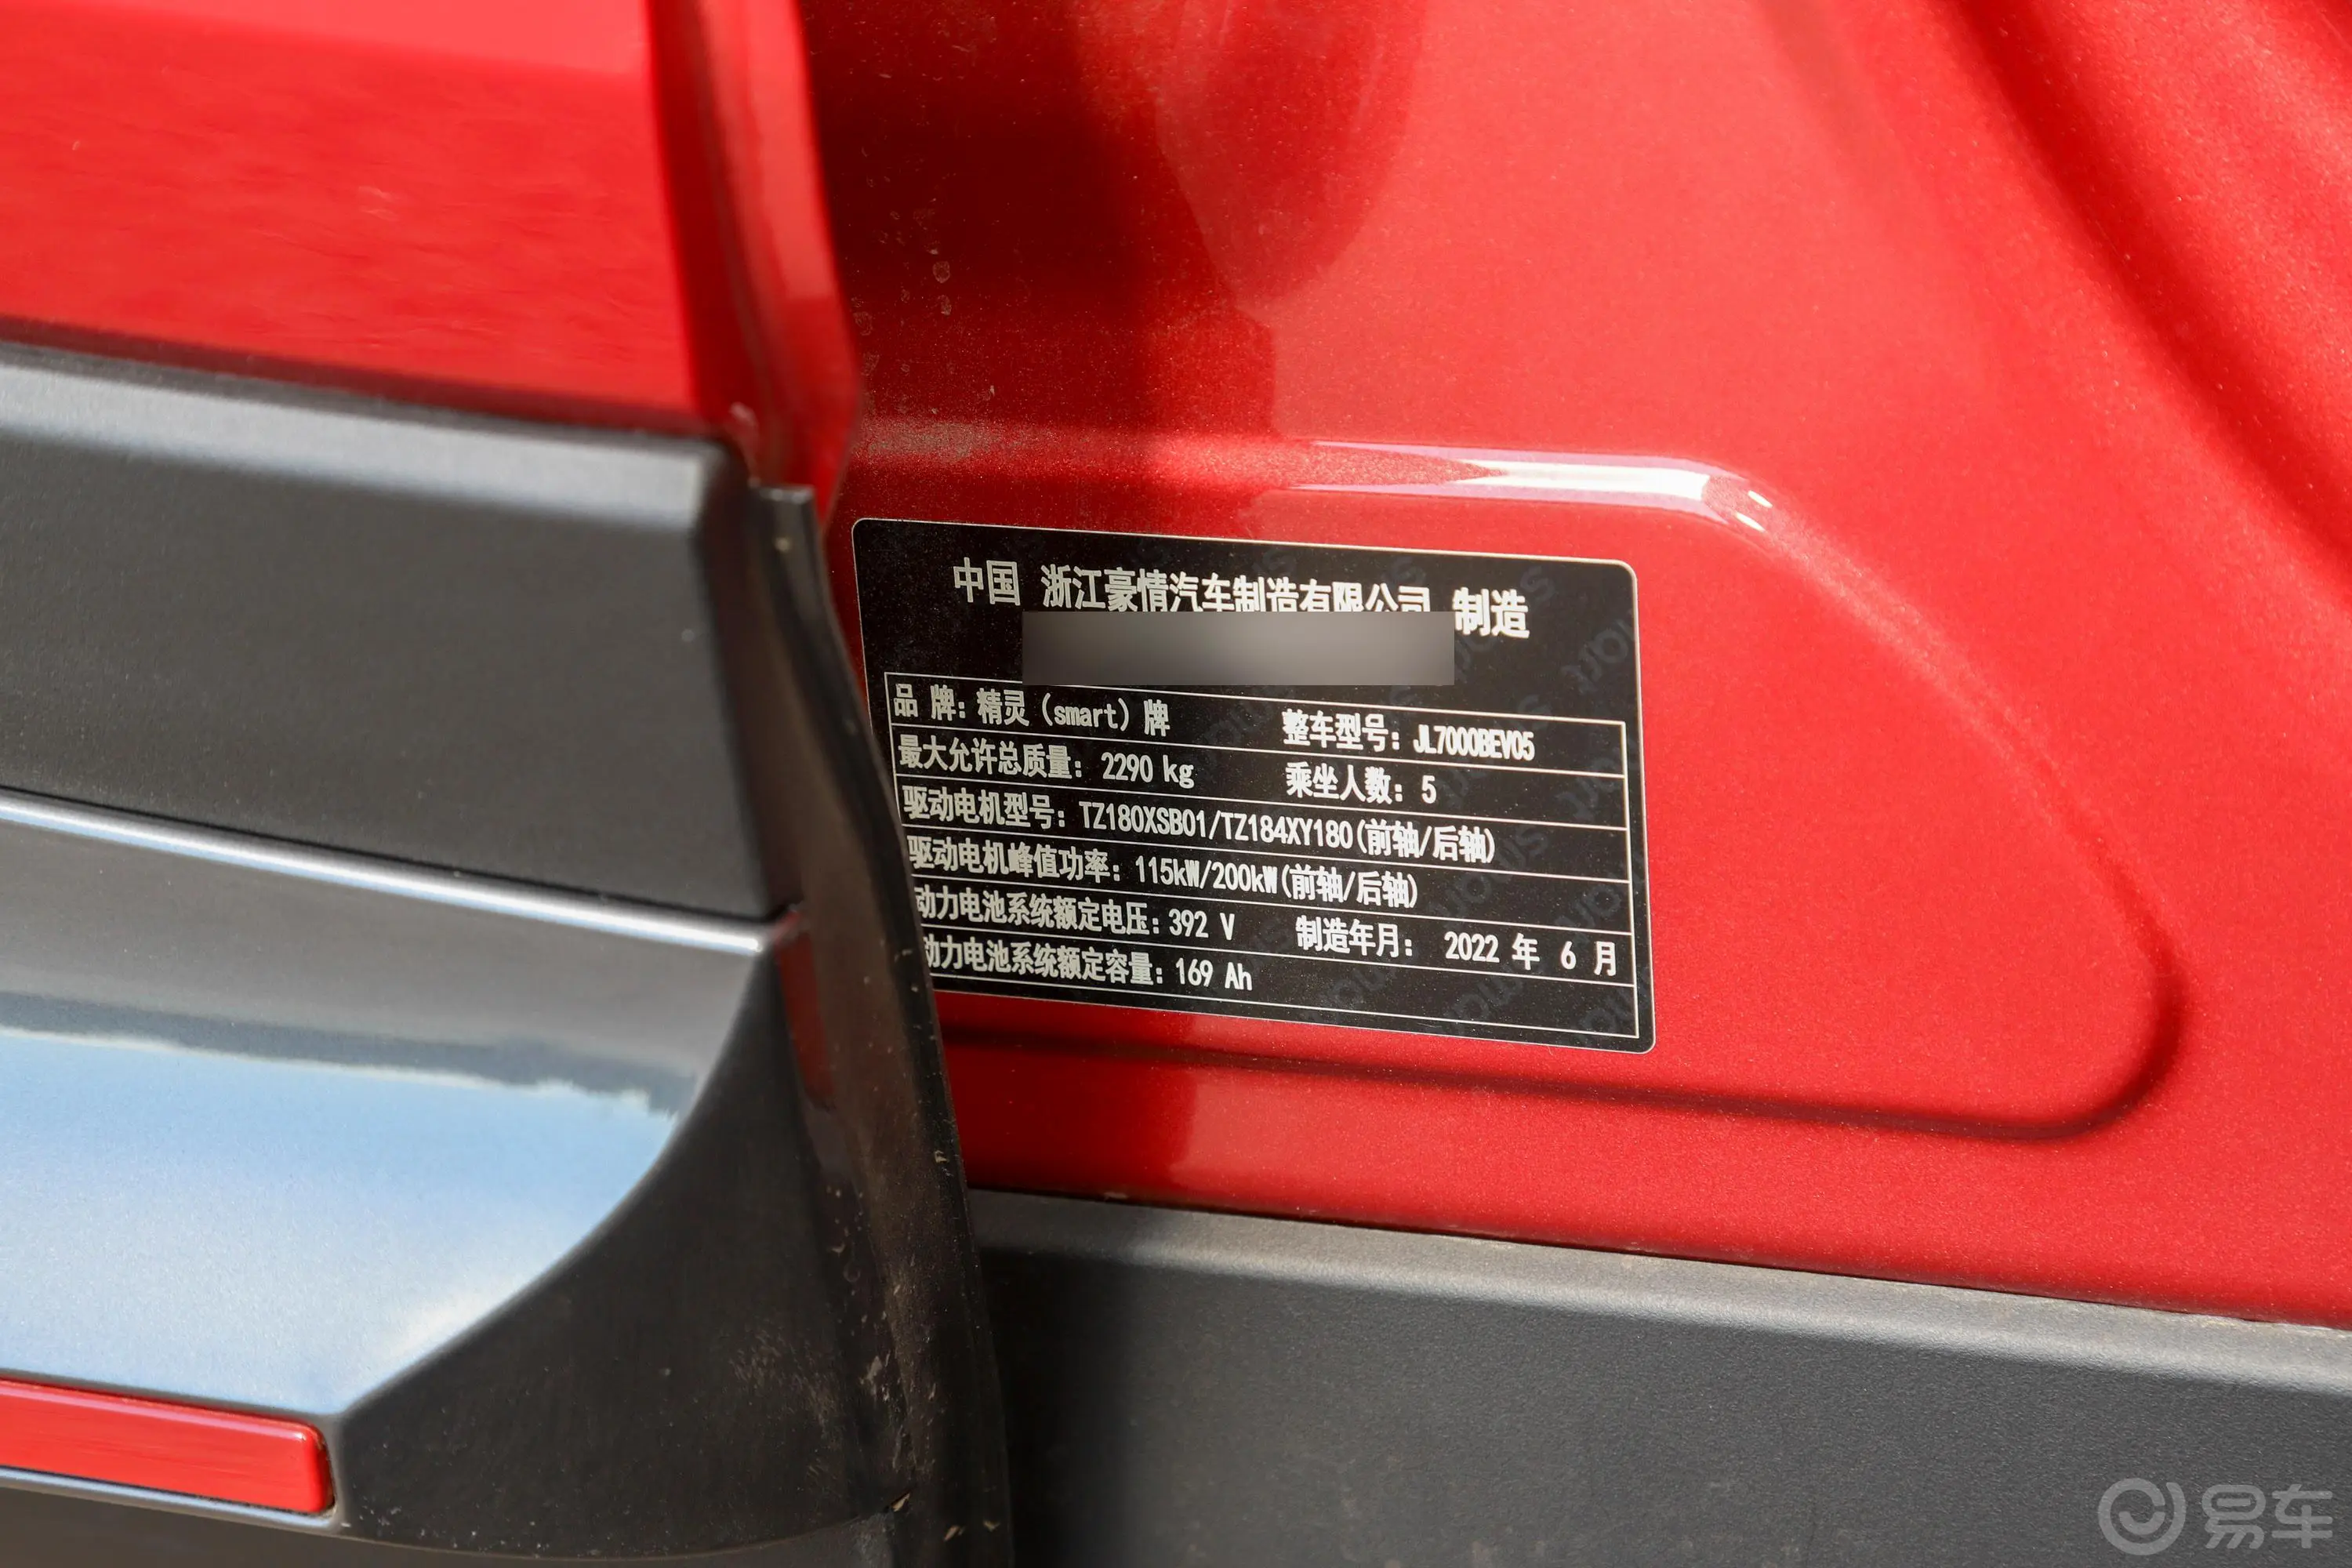 smart精灵#1500km 四驱BRABUS性能版车辆信息铭牌